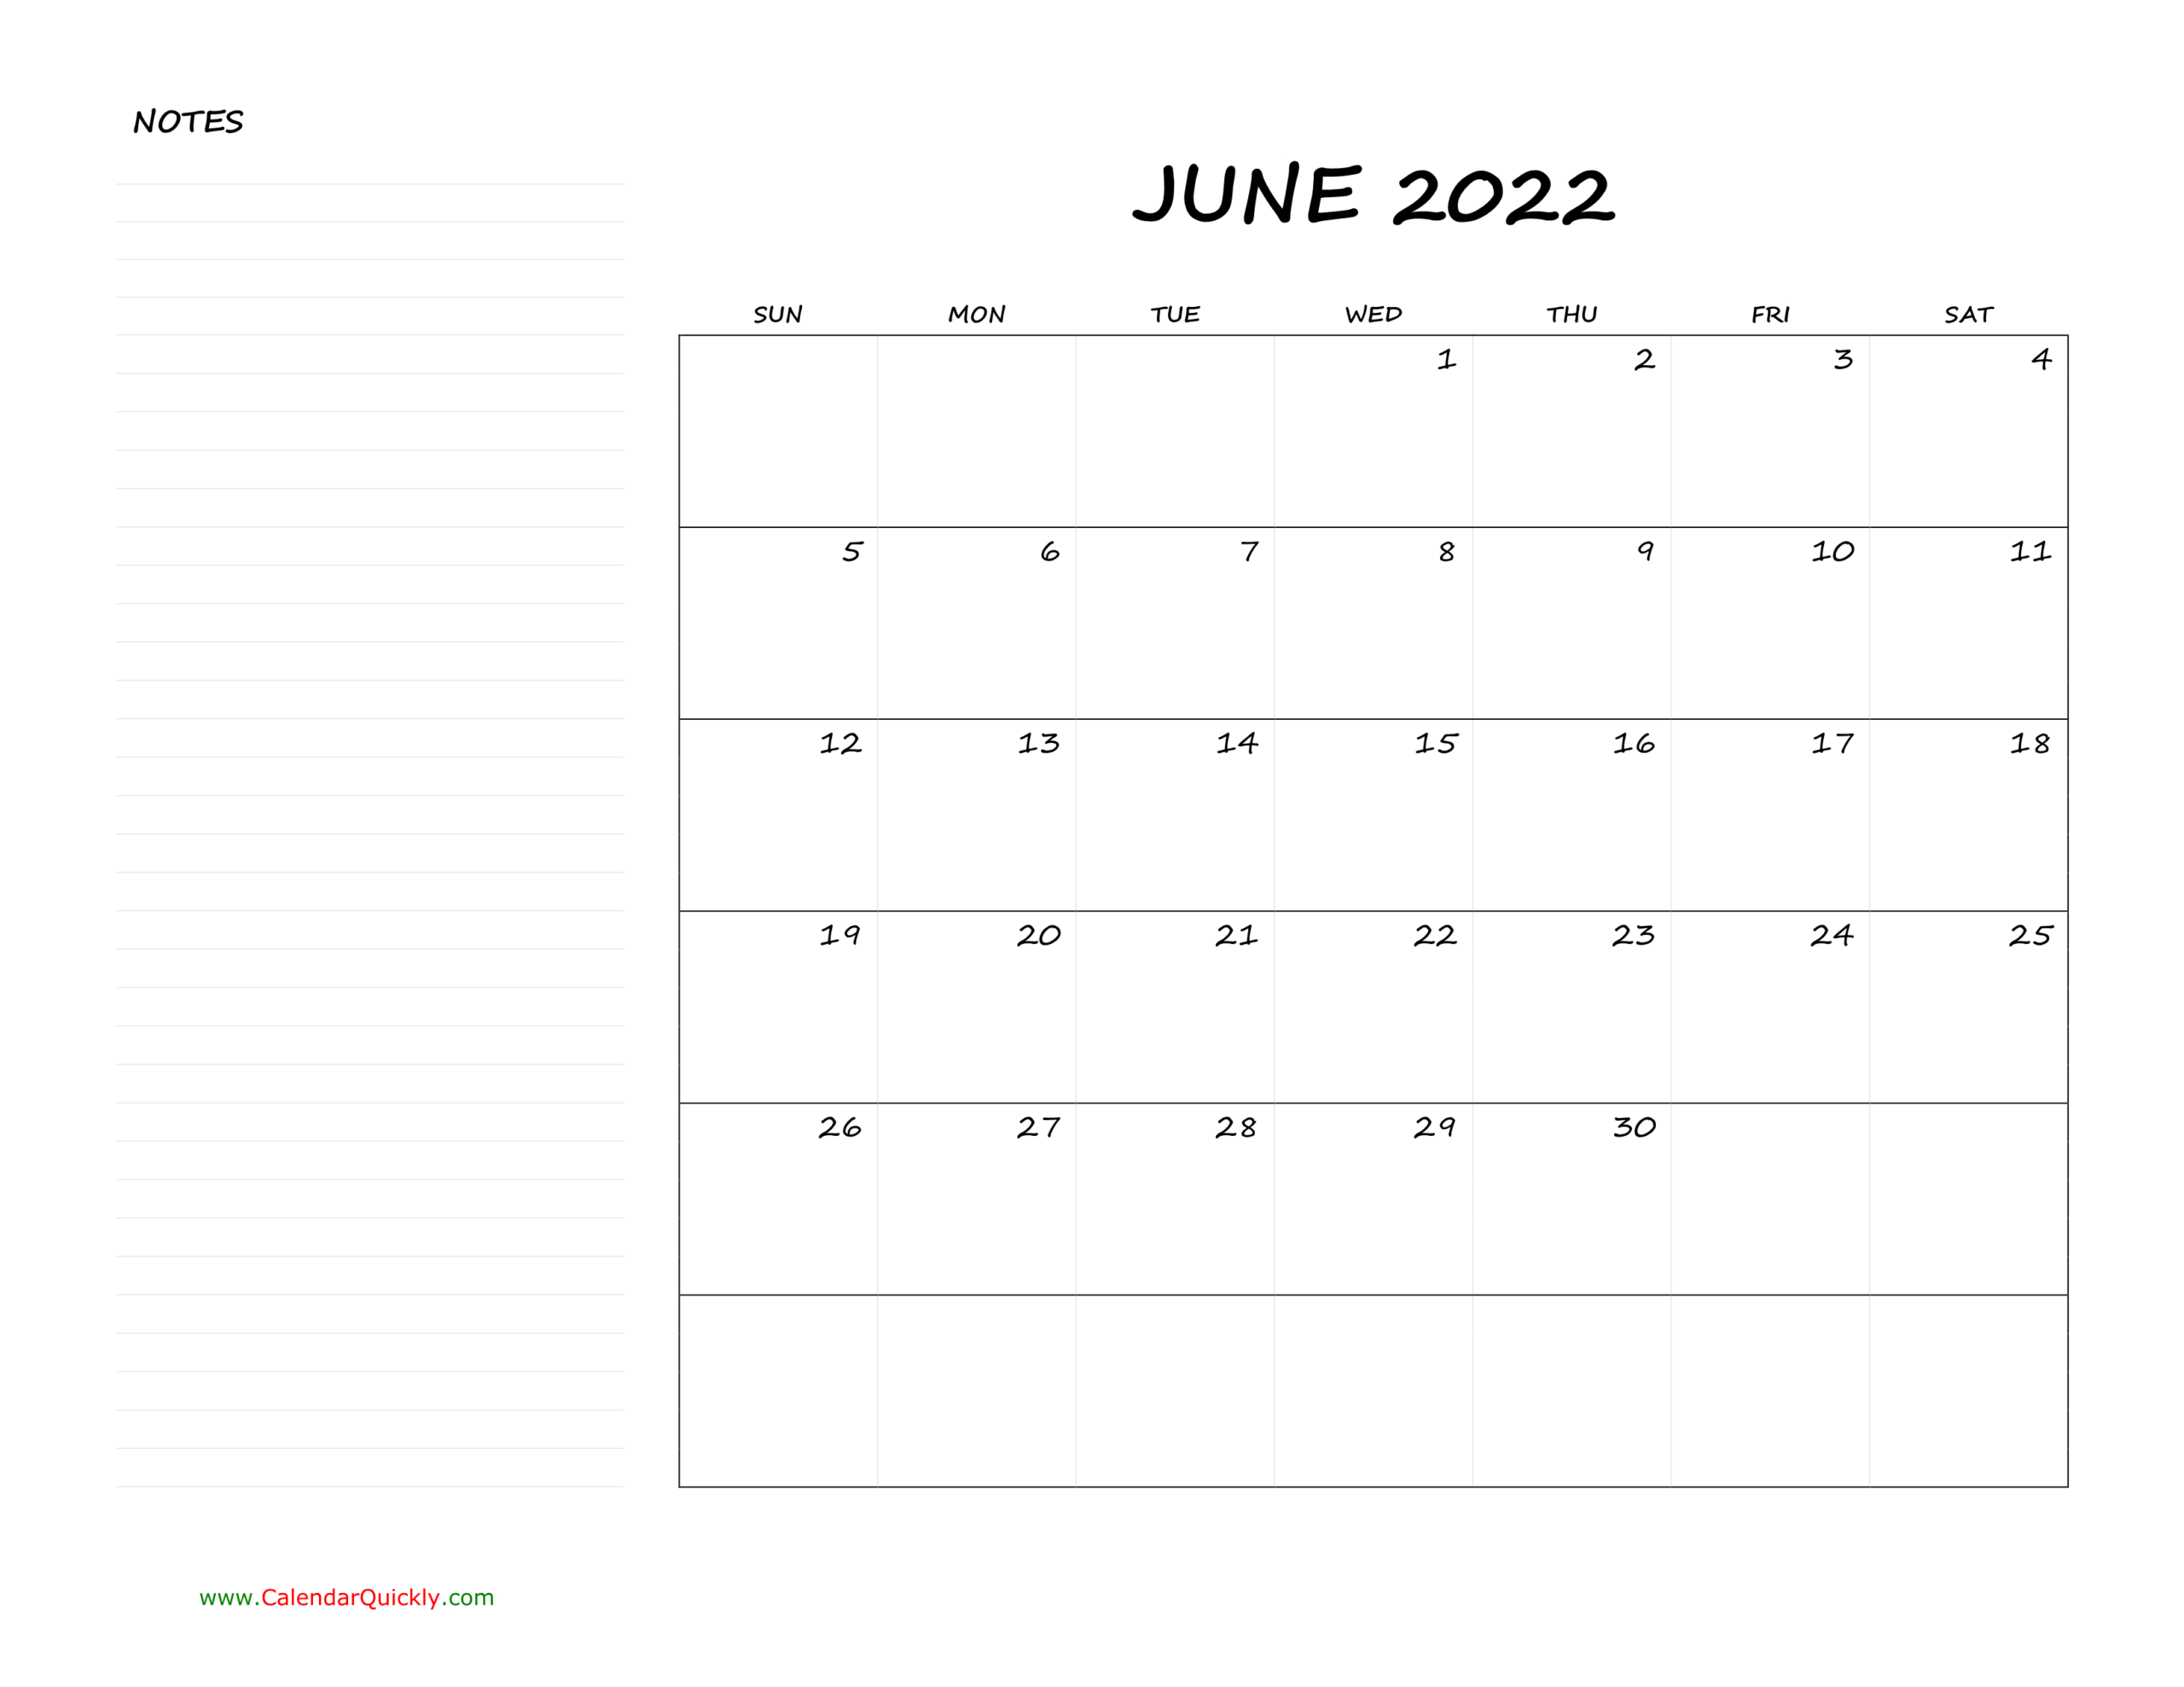 June Blank Calendar 2022 With Notes | Calendar Quickly